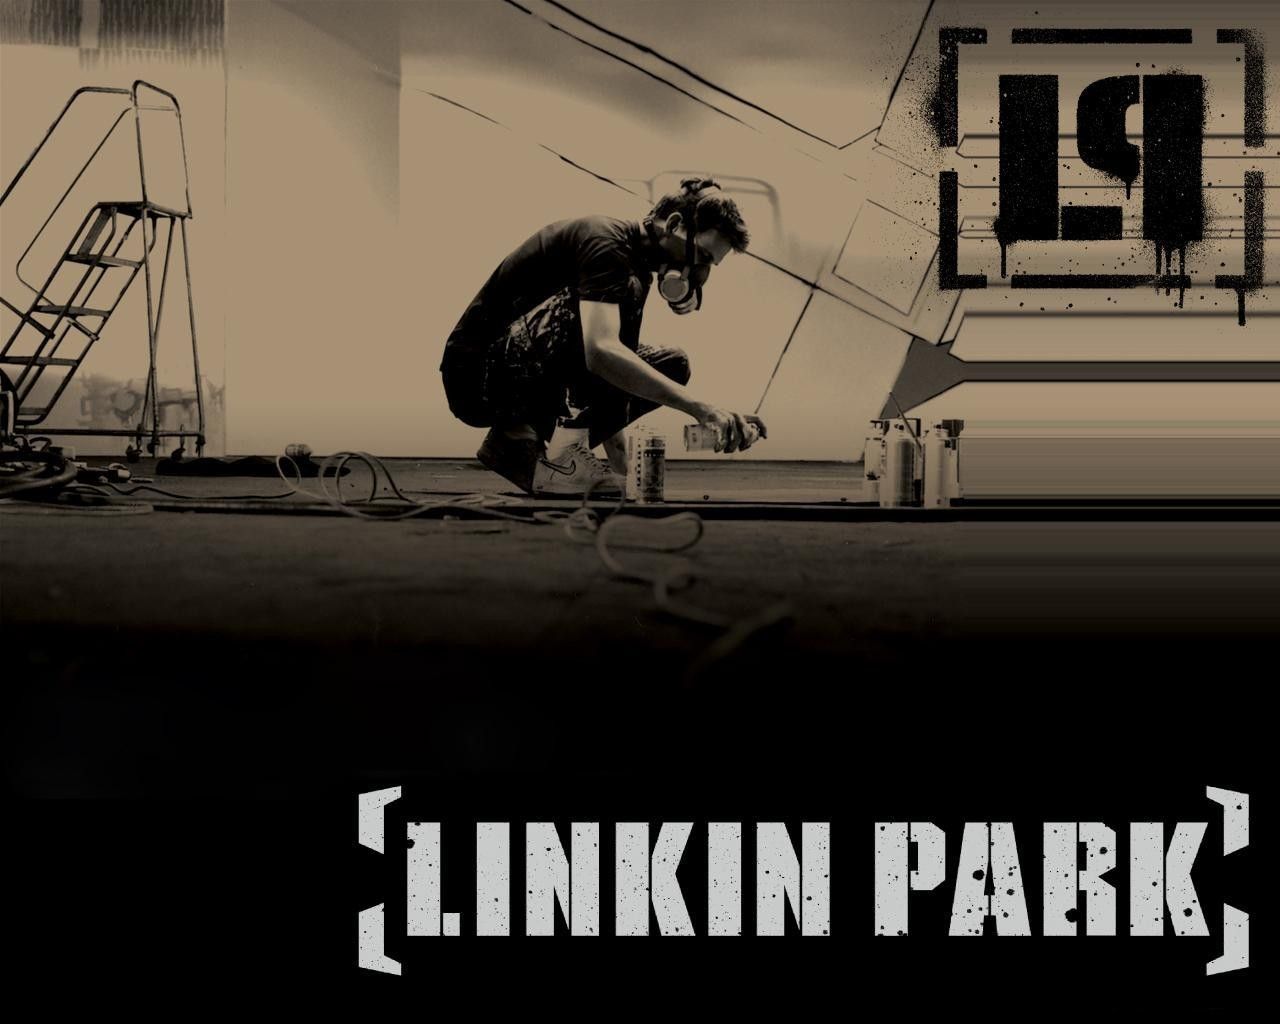 Menelisik Album Musik Meteora dari Linkin Park